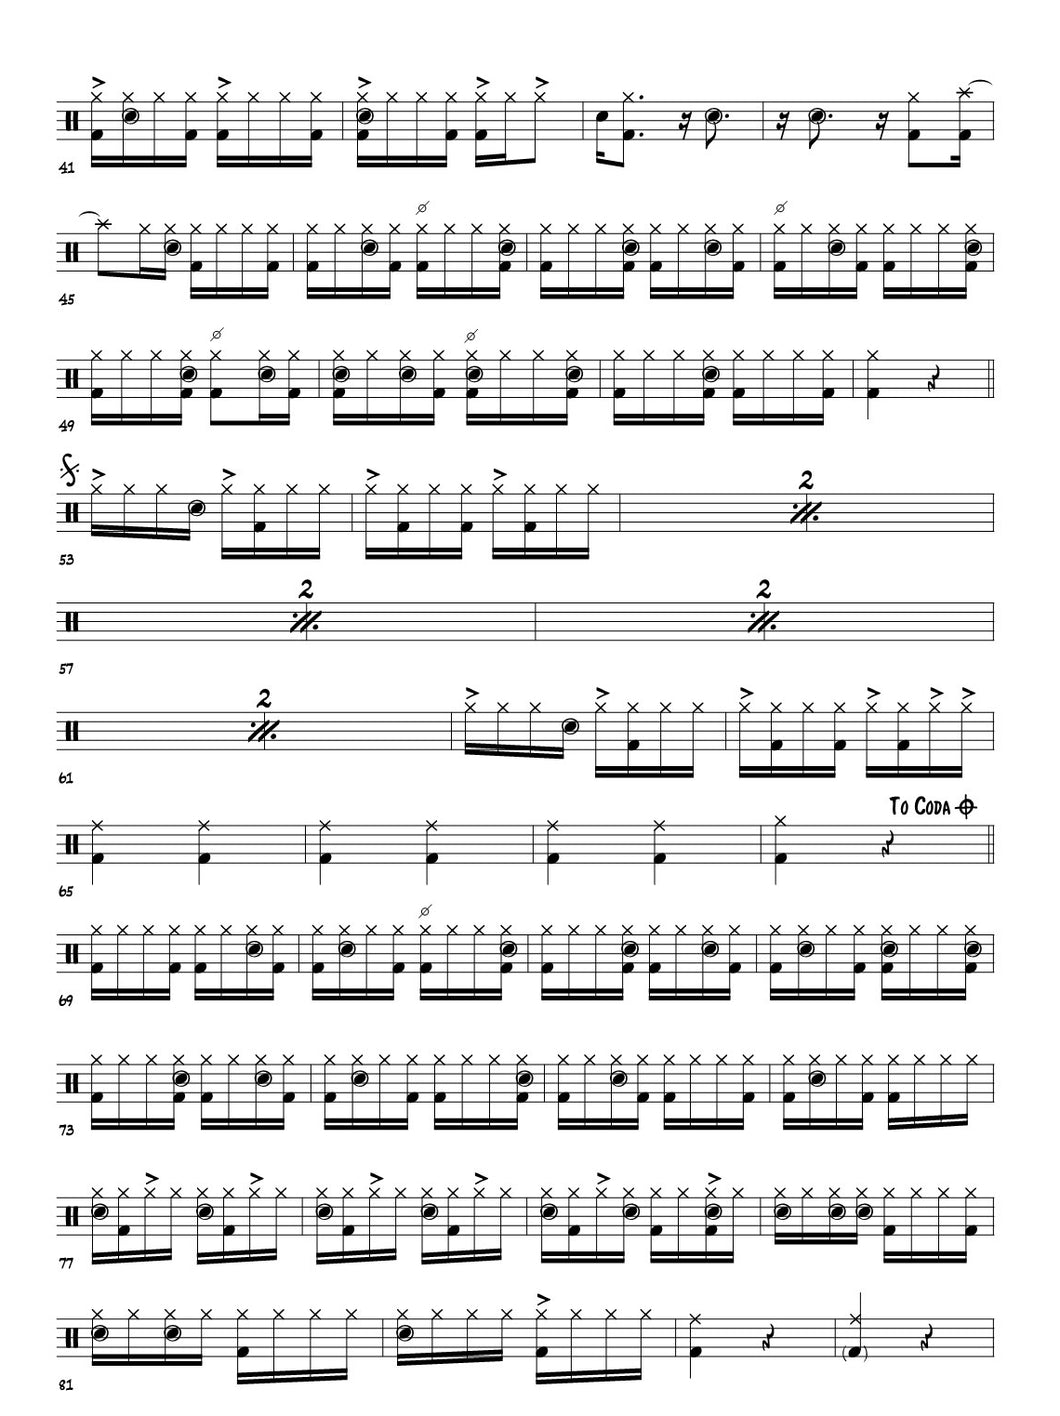 Ladeira da Preguica - Rosa Passos - Full Drum Transcription / Drum Sheet Music - FrancisDrummingBlog.com